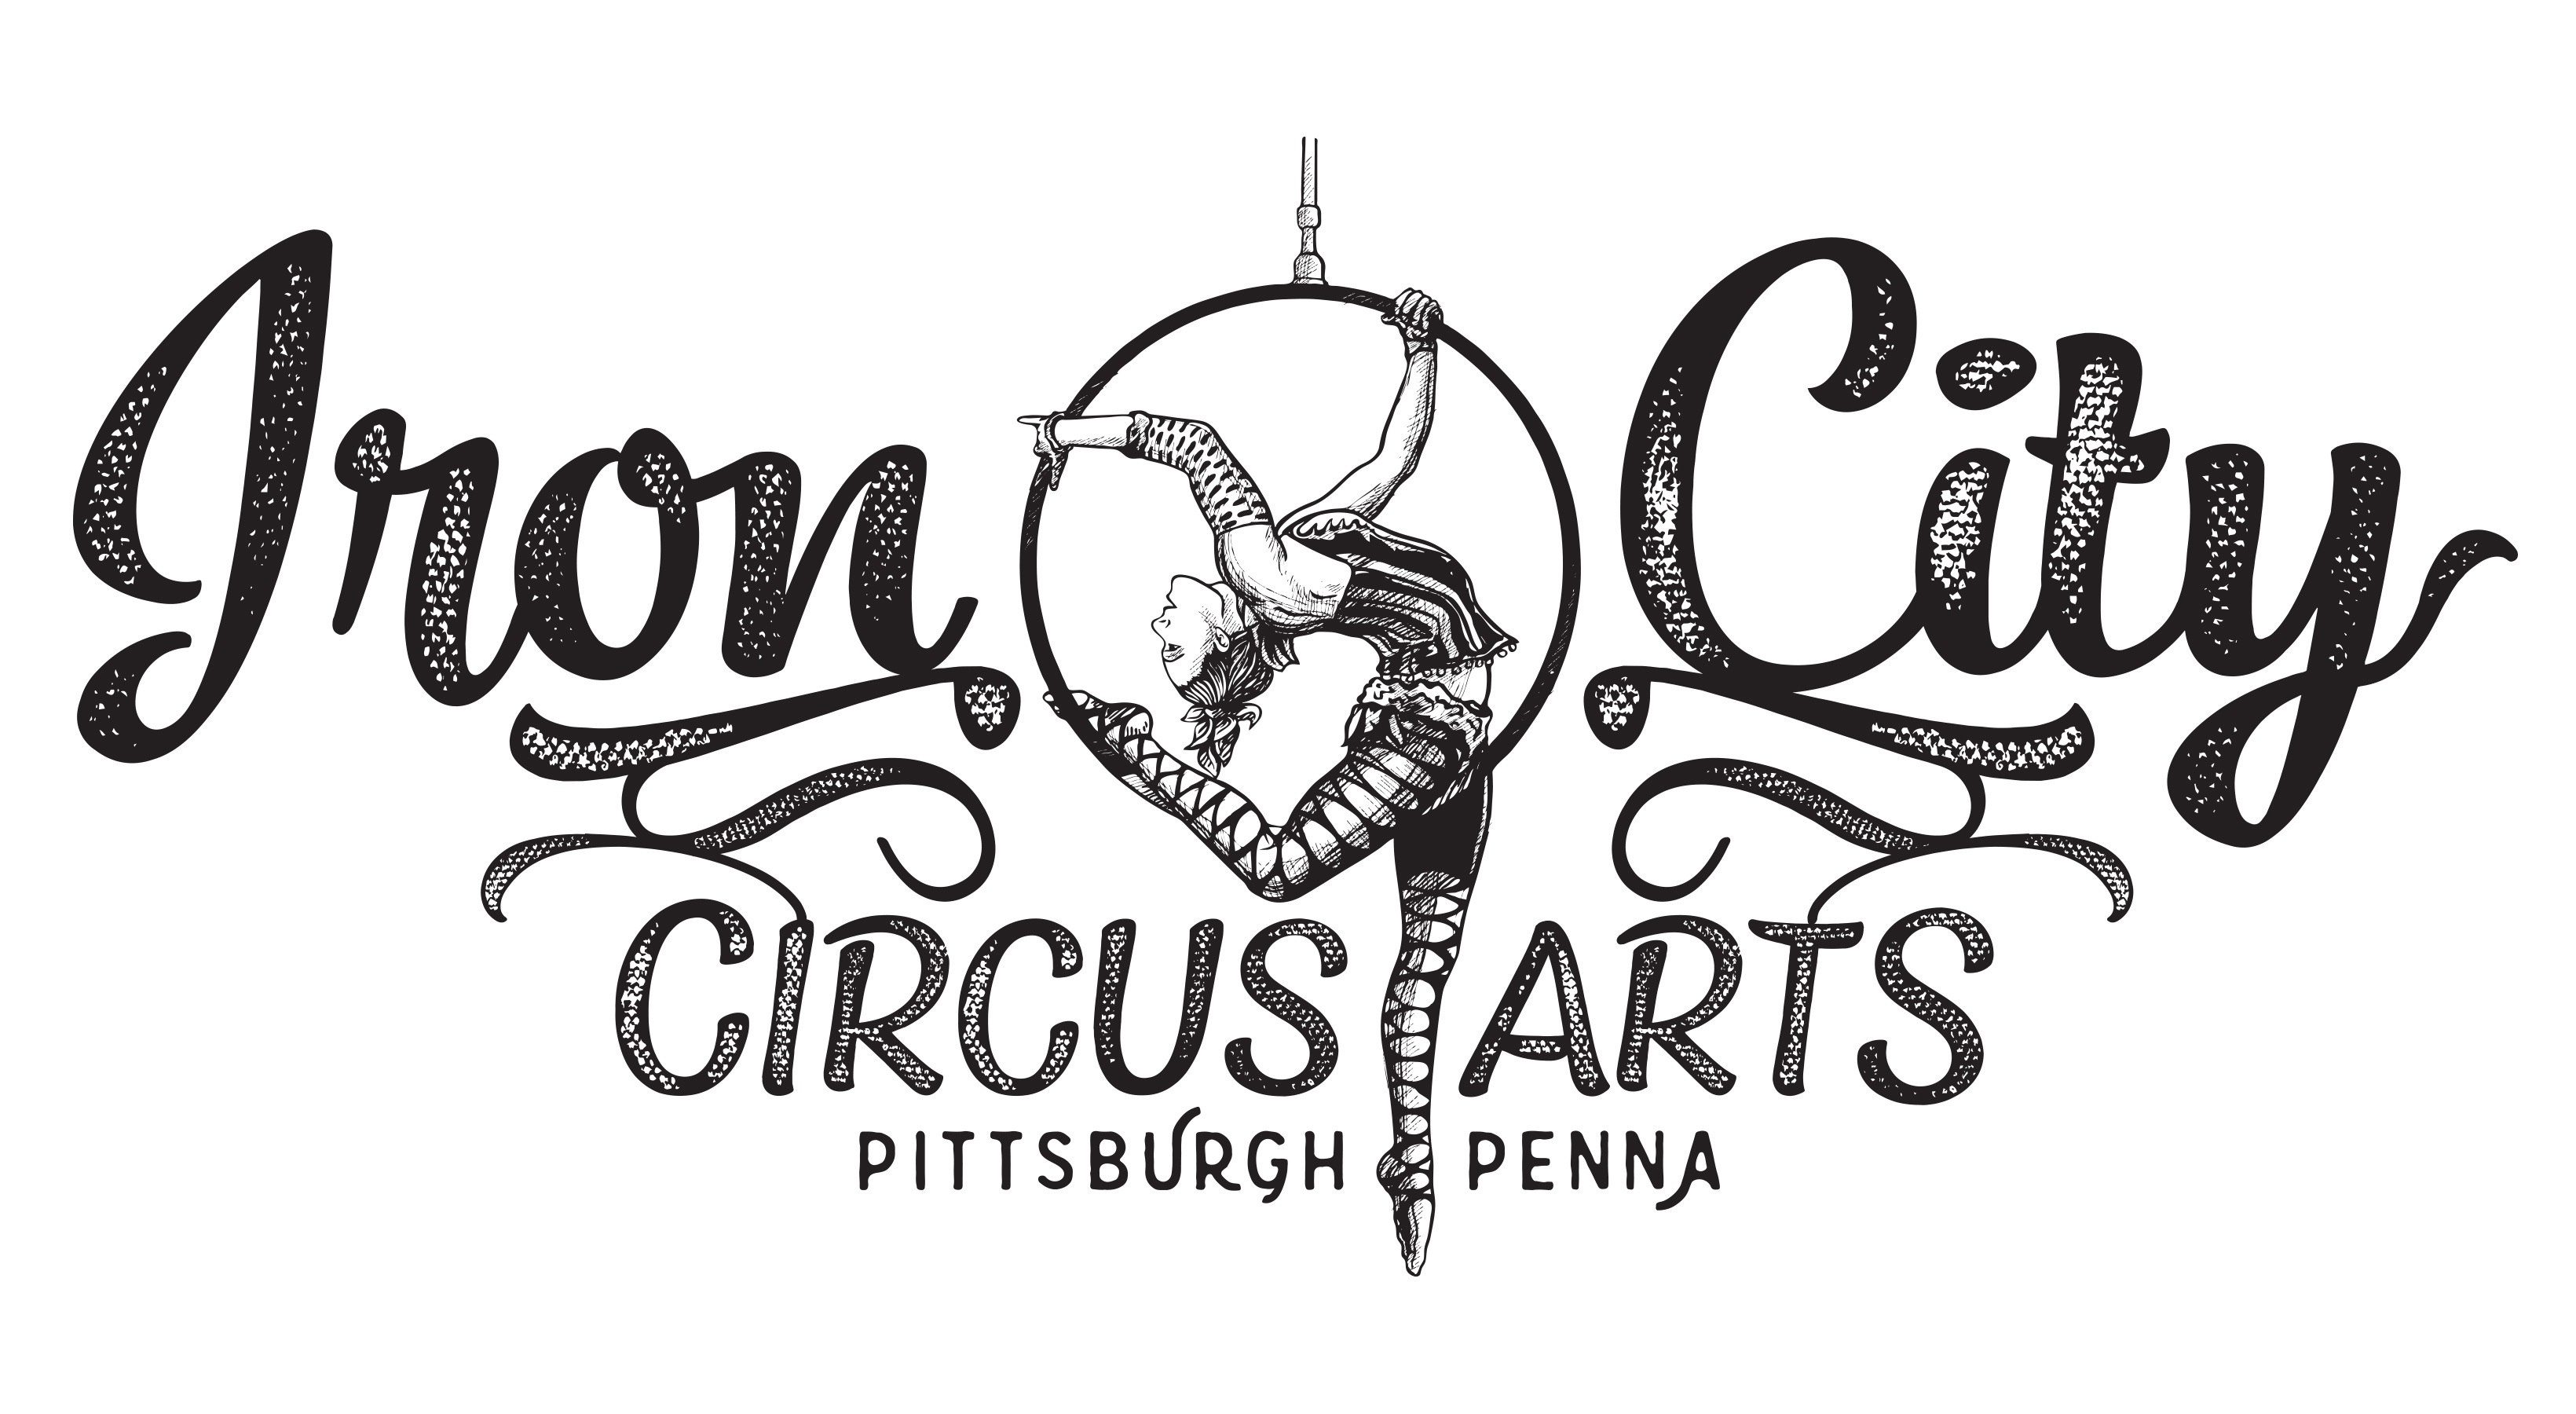 Iron City Circus Arts